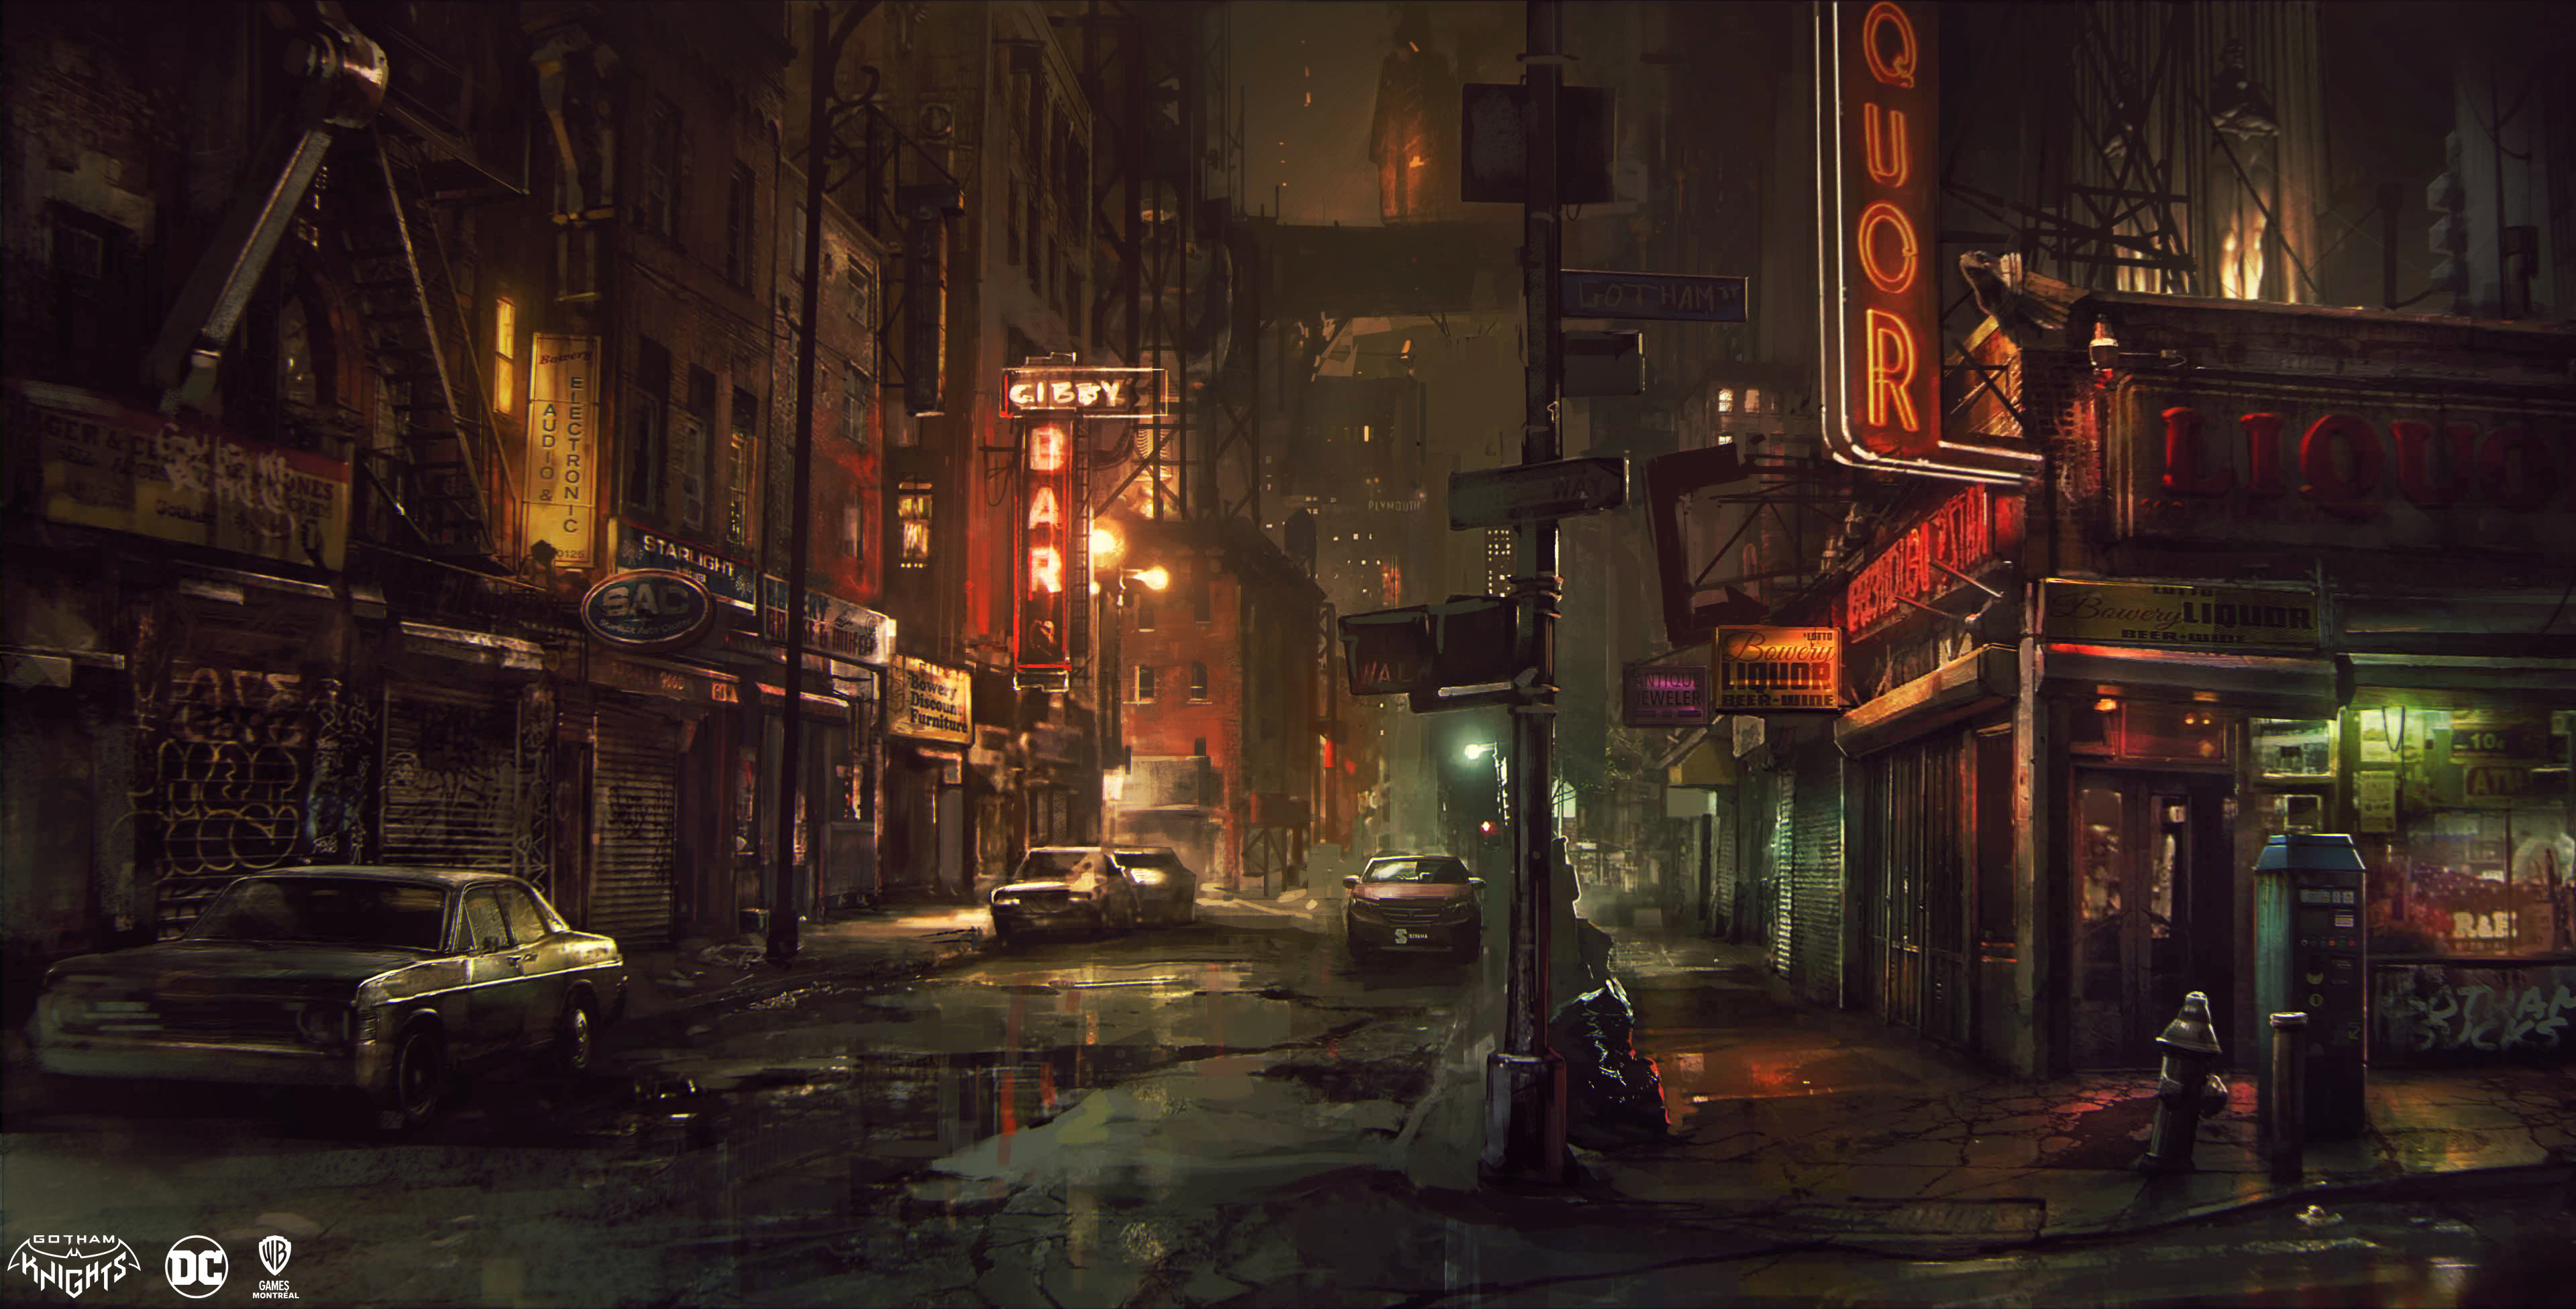 Bowery - New Gotham